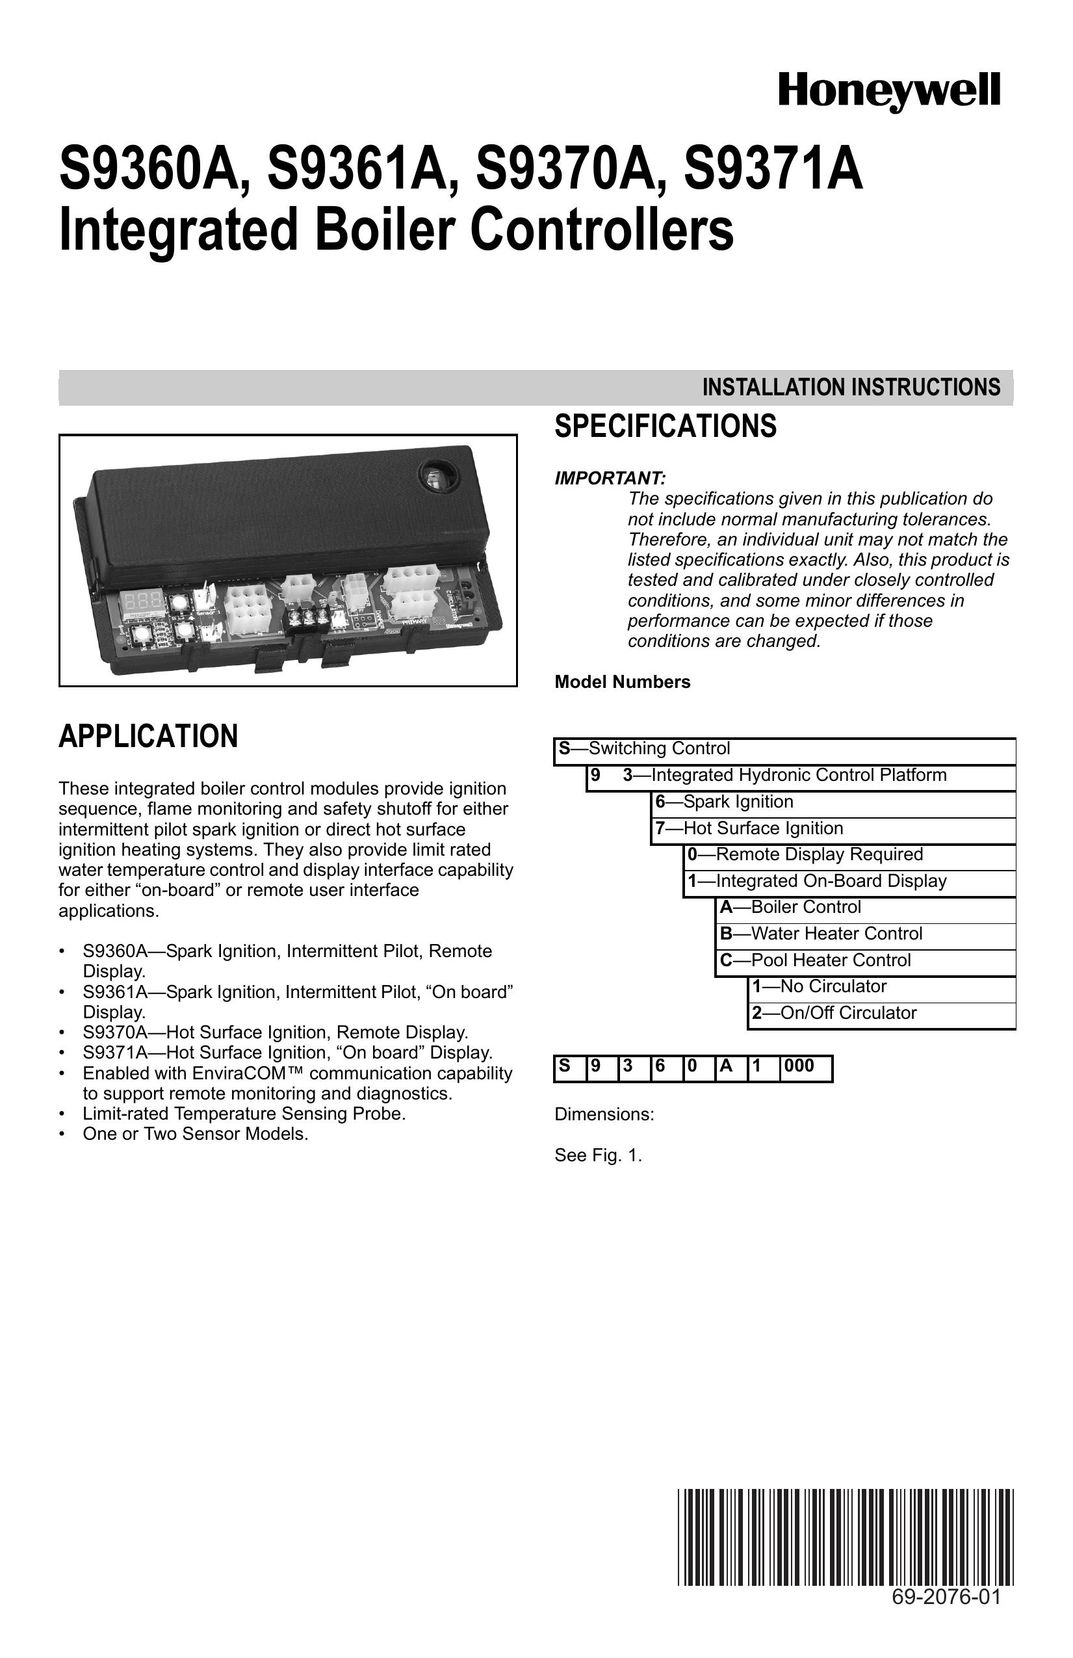 Honeywell S9371A Boiler User Manual